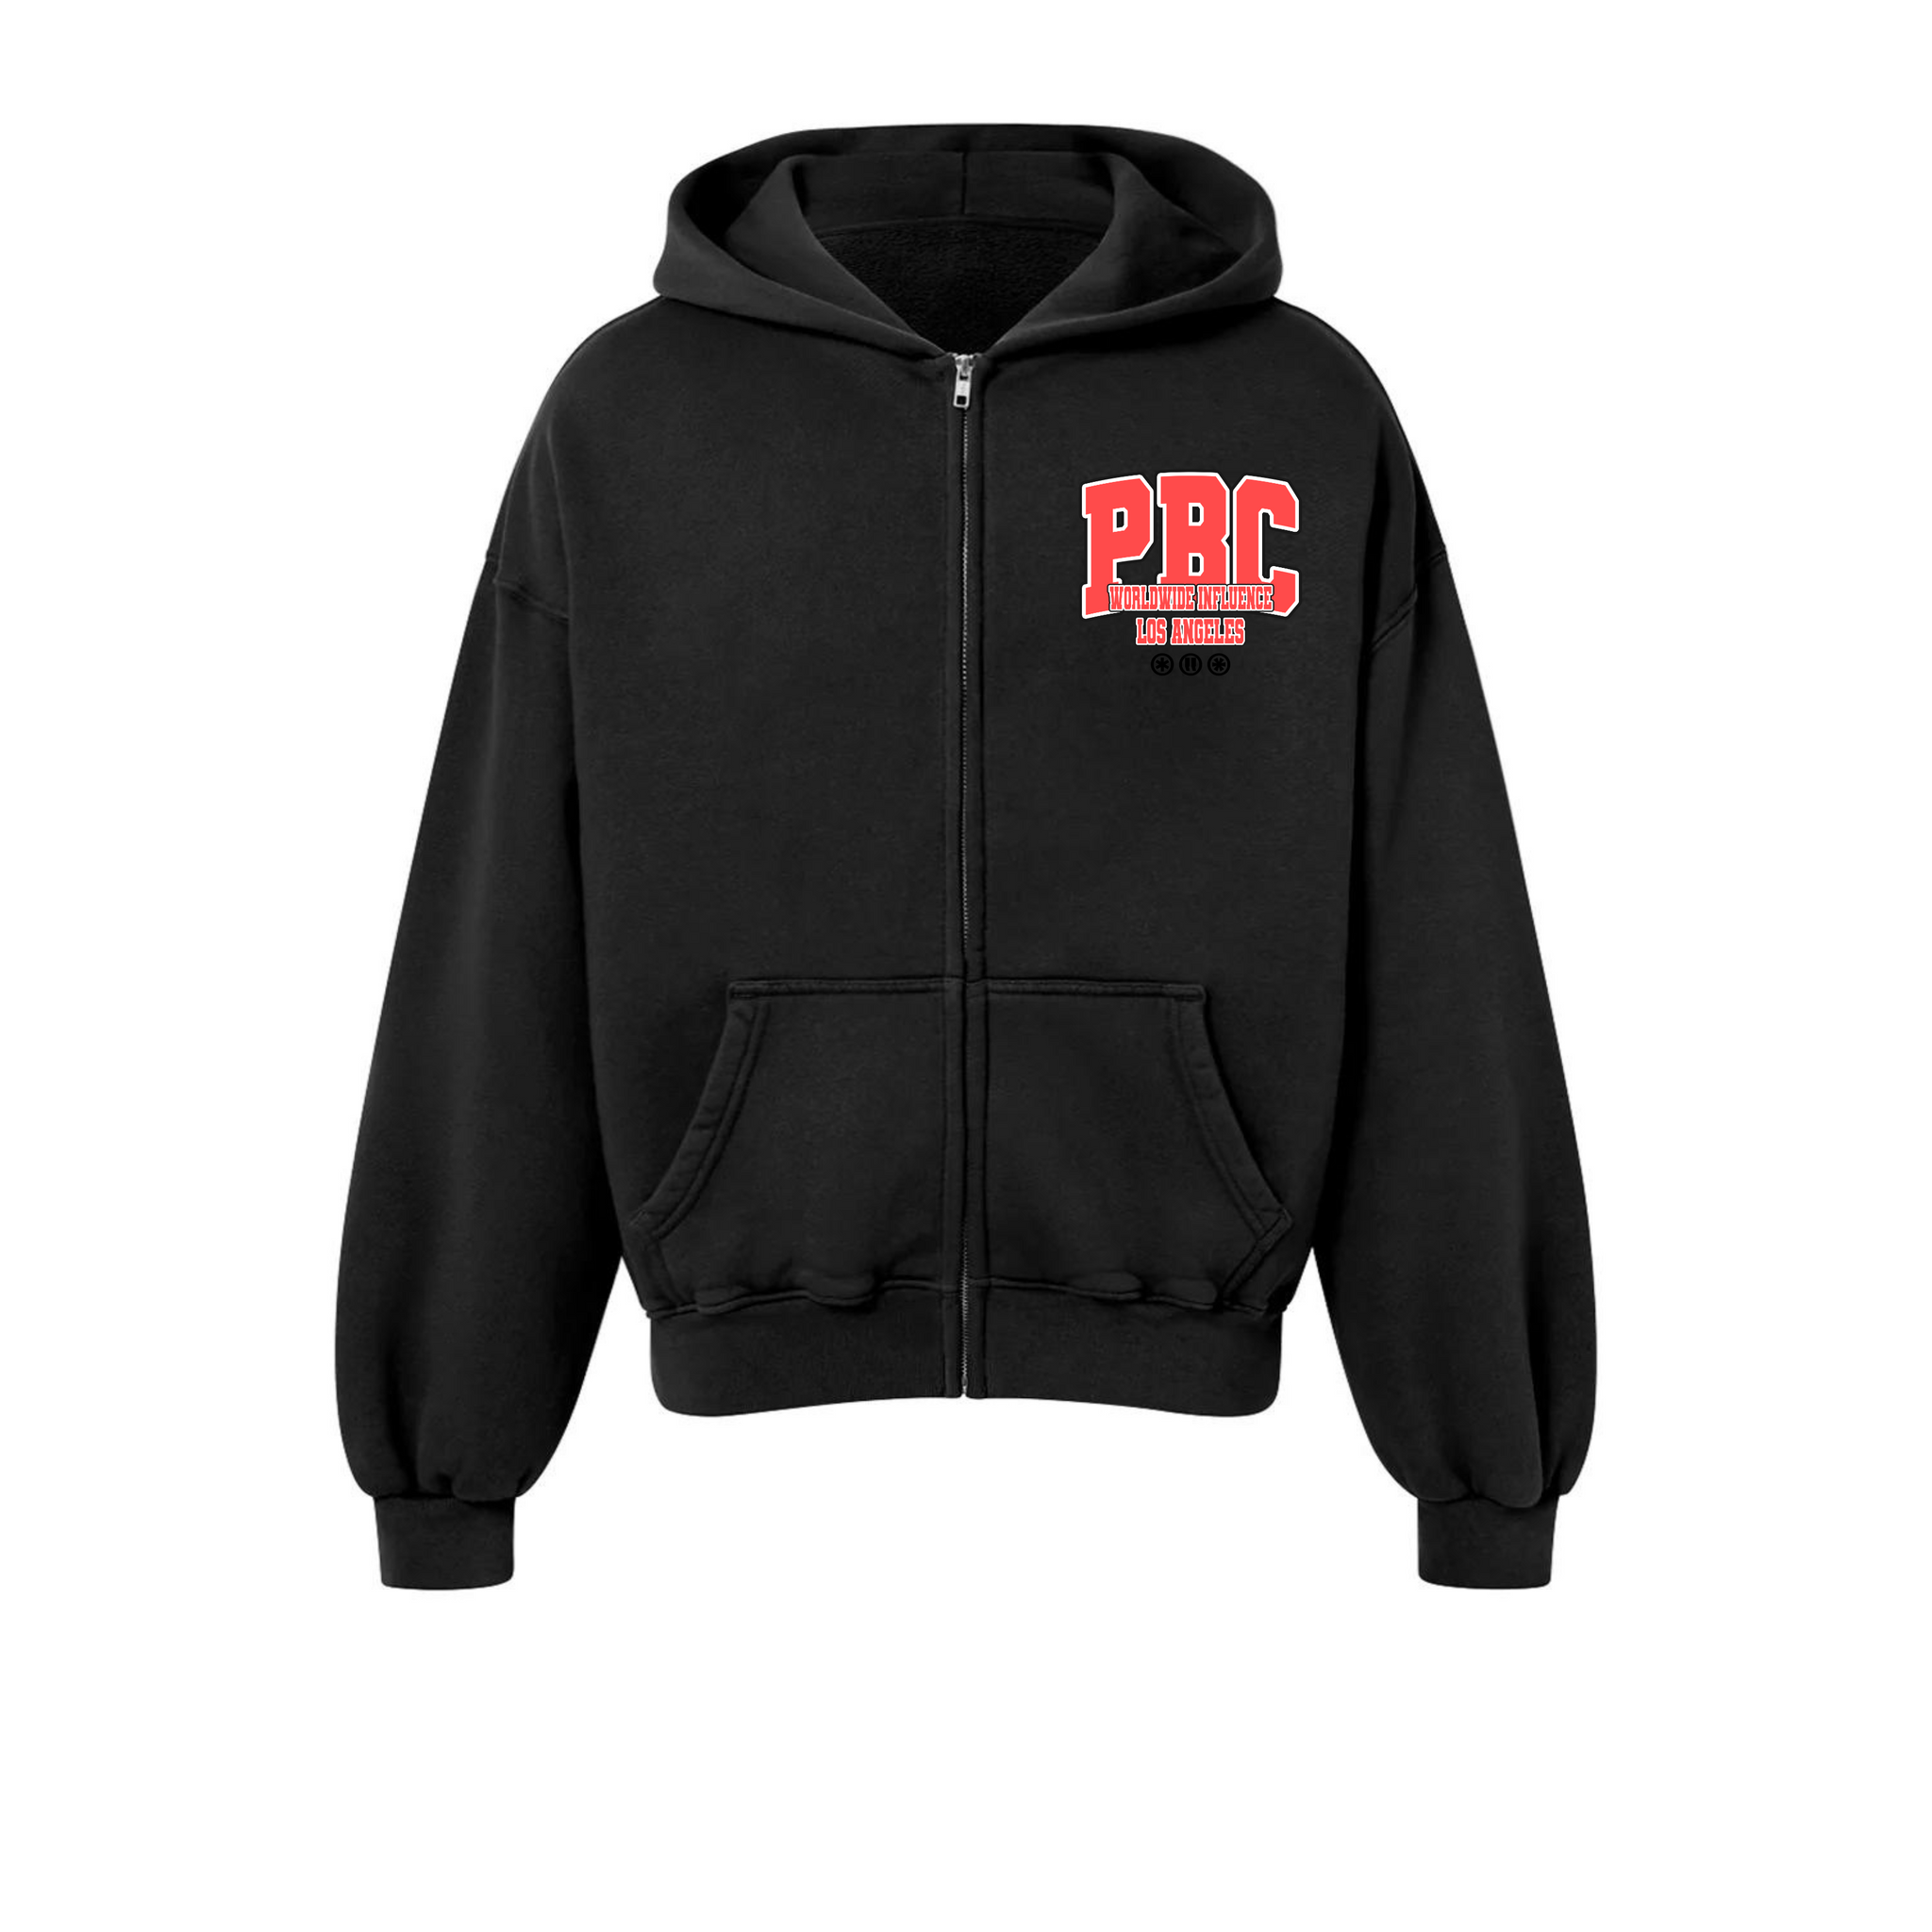 PBC Worldwide Full Zip Jacket (Black)